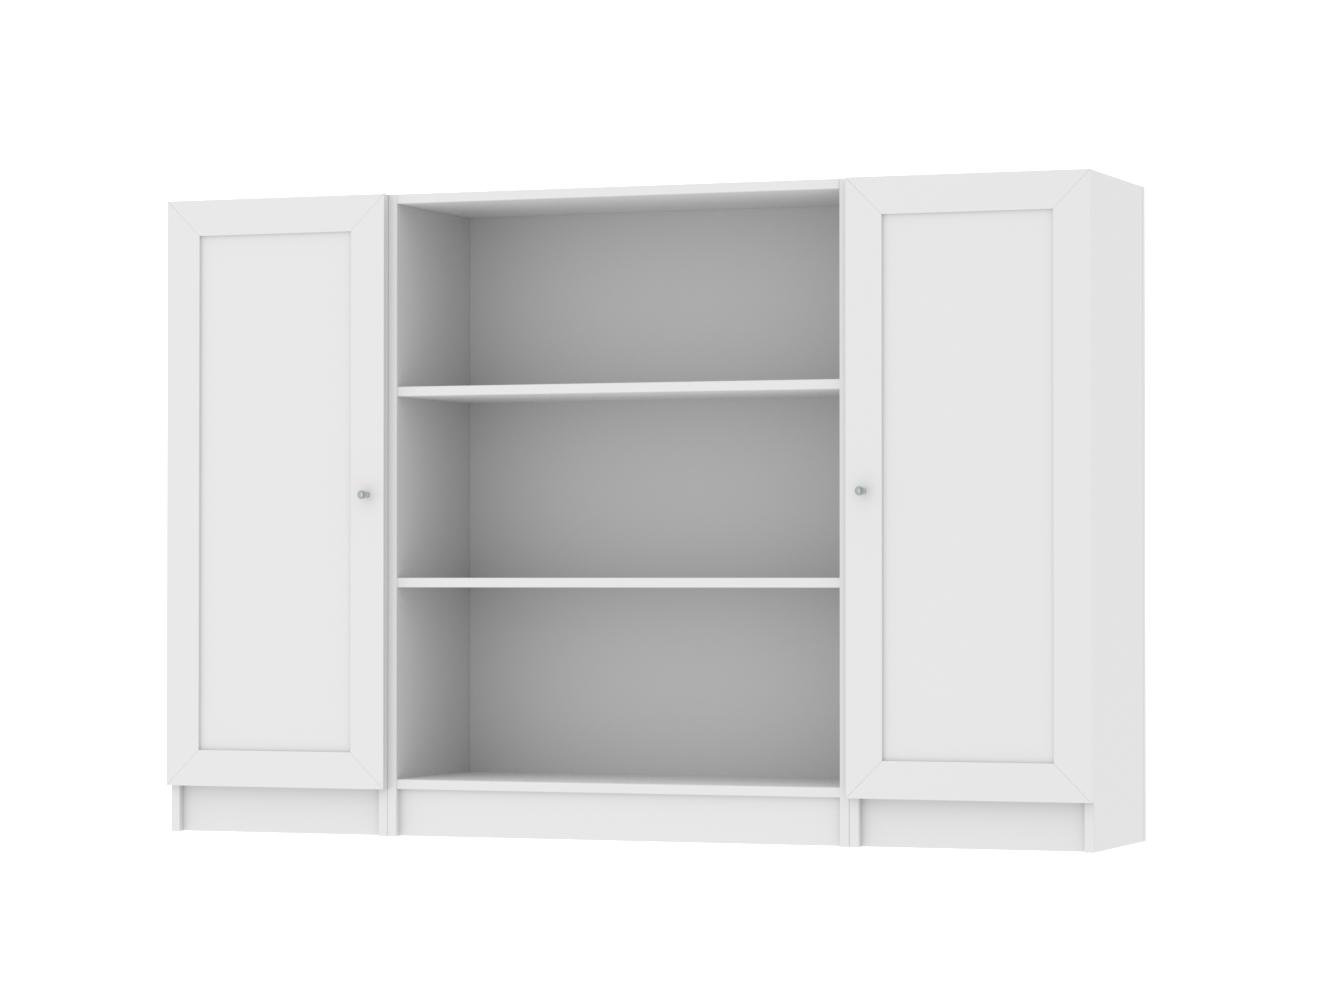 Изображение товара Комод Билли 214 white ИКЕА (IKEA), 160x30x106 см на сайте adeta.ru